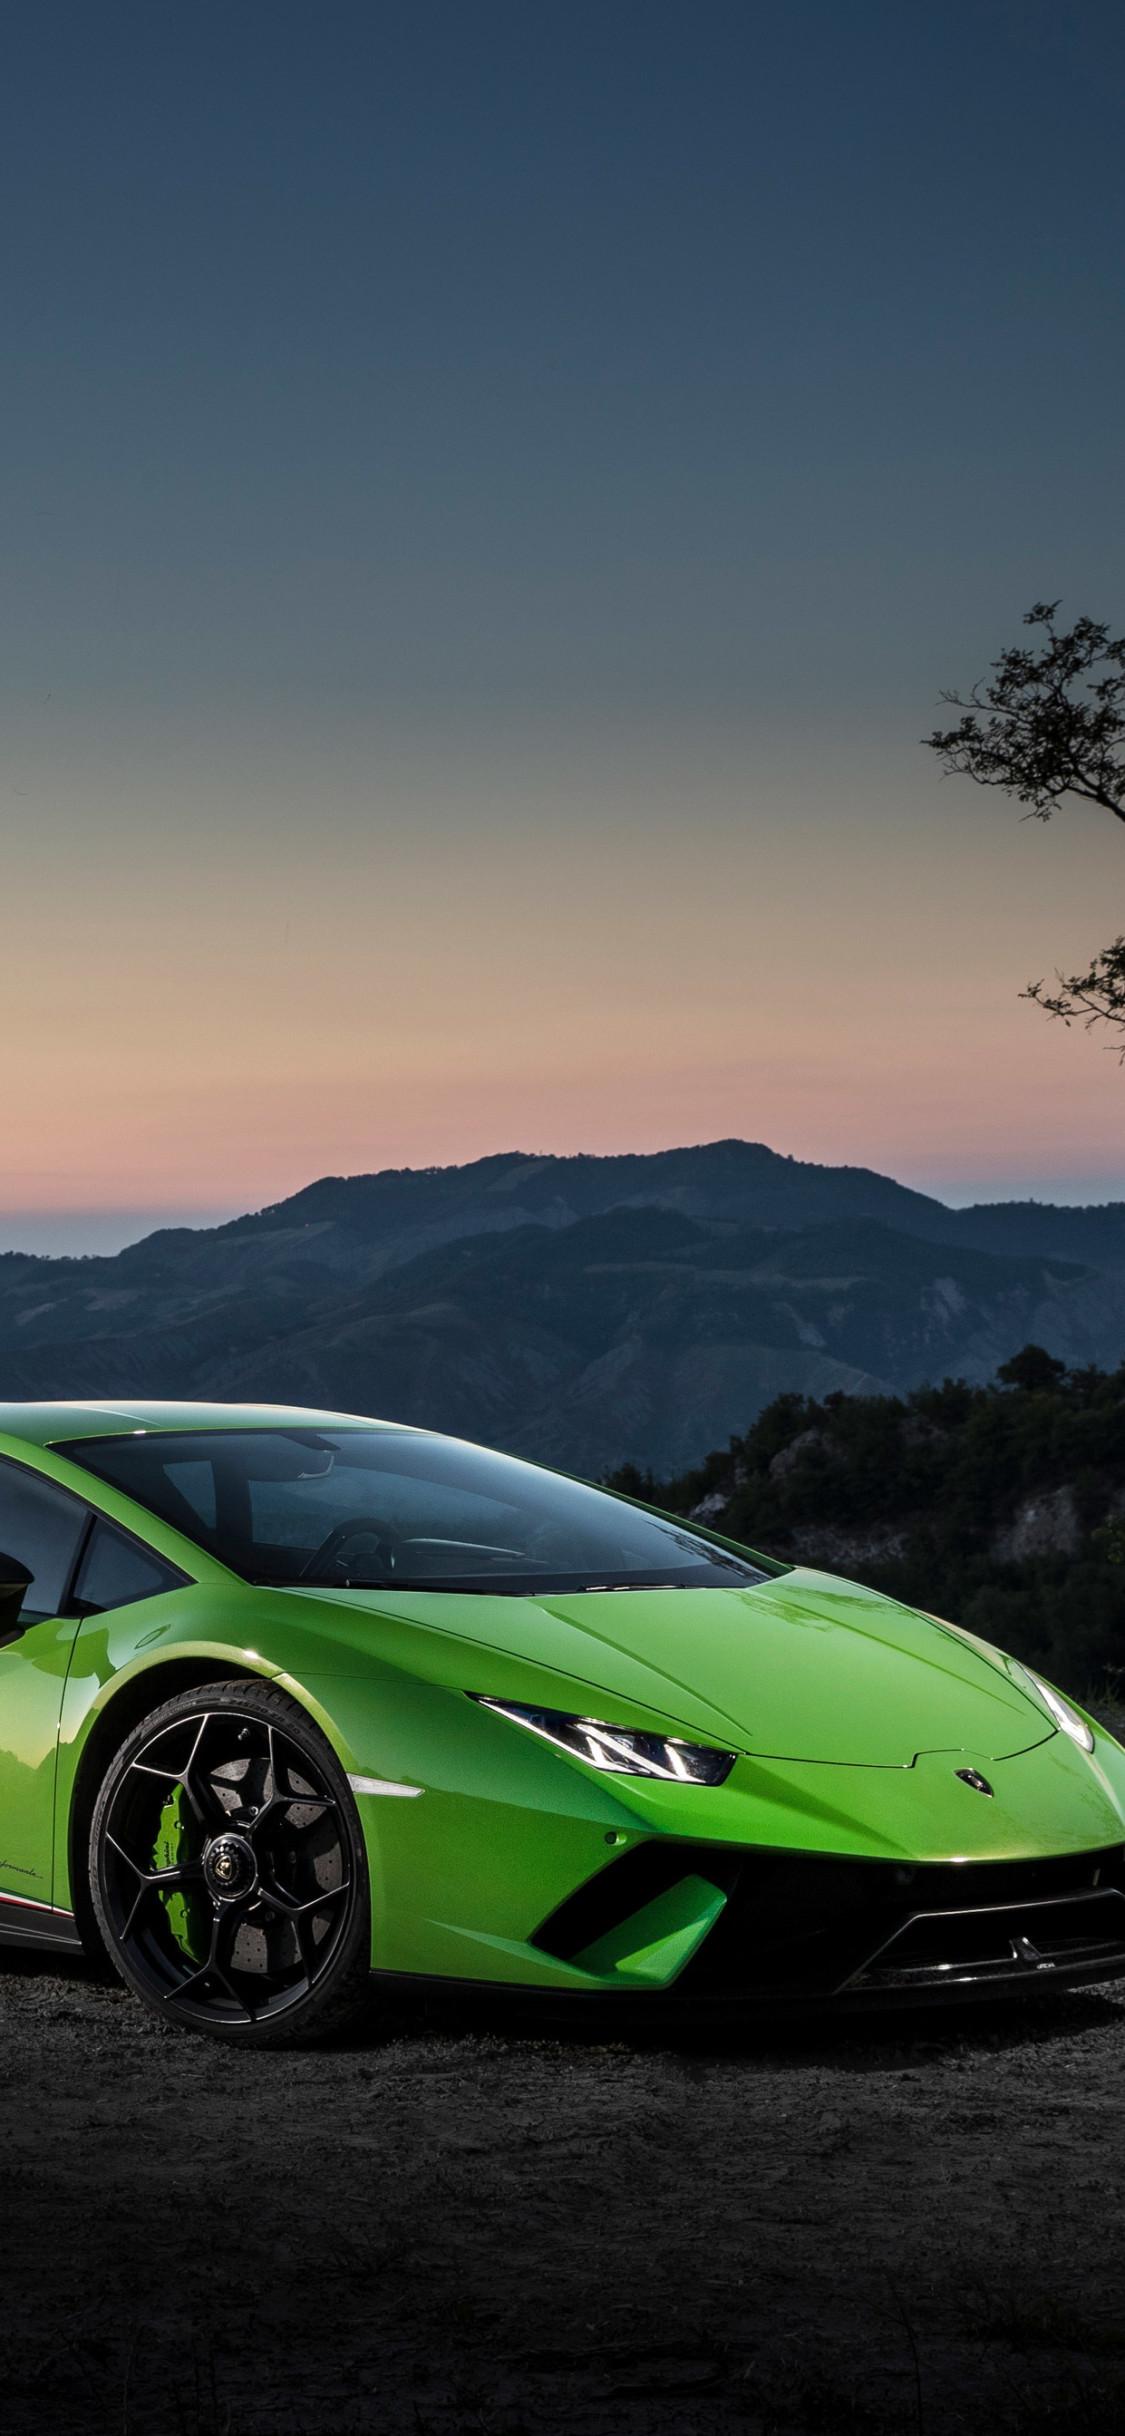 4k Lamborghini Huracan Performante iPhone XS